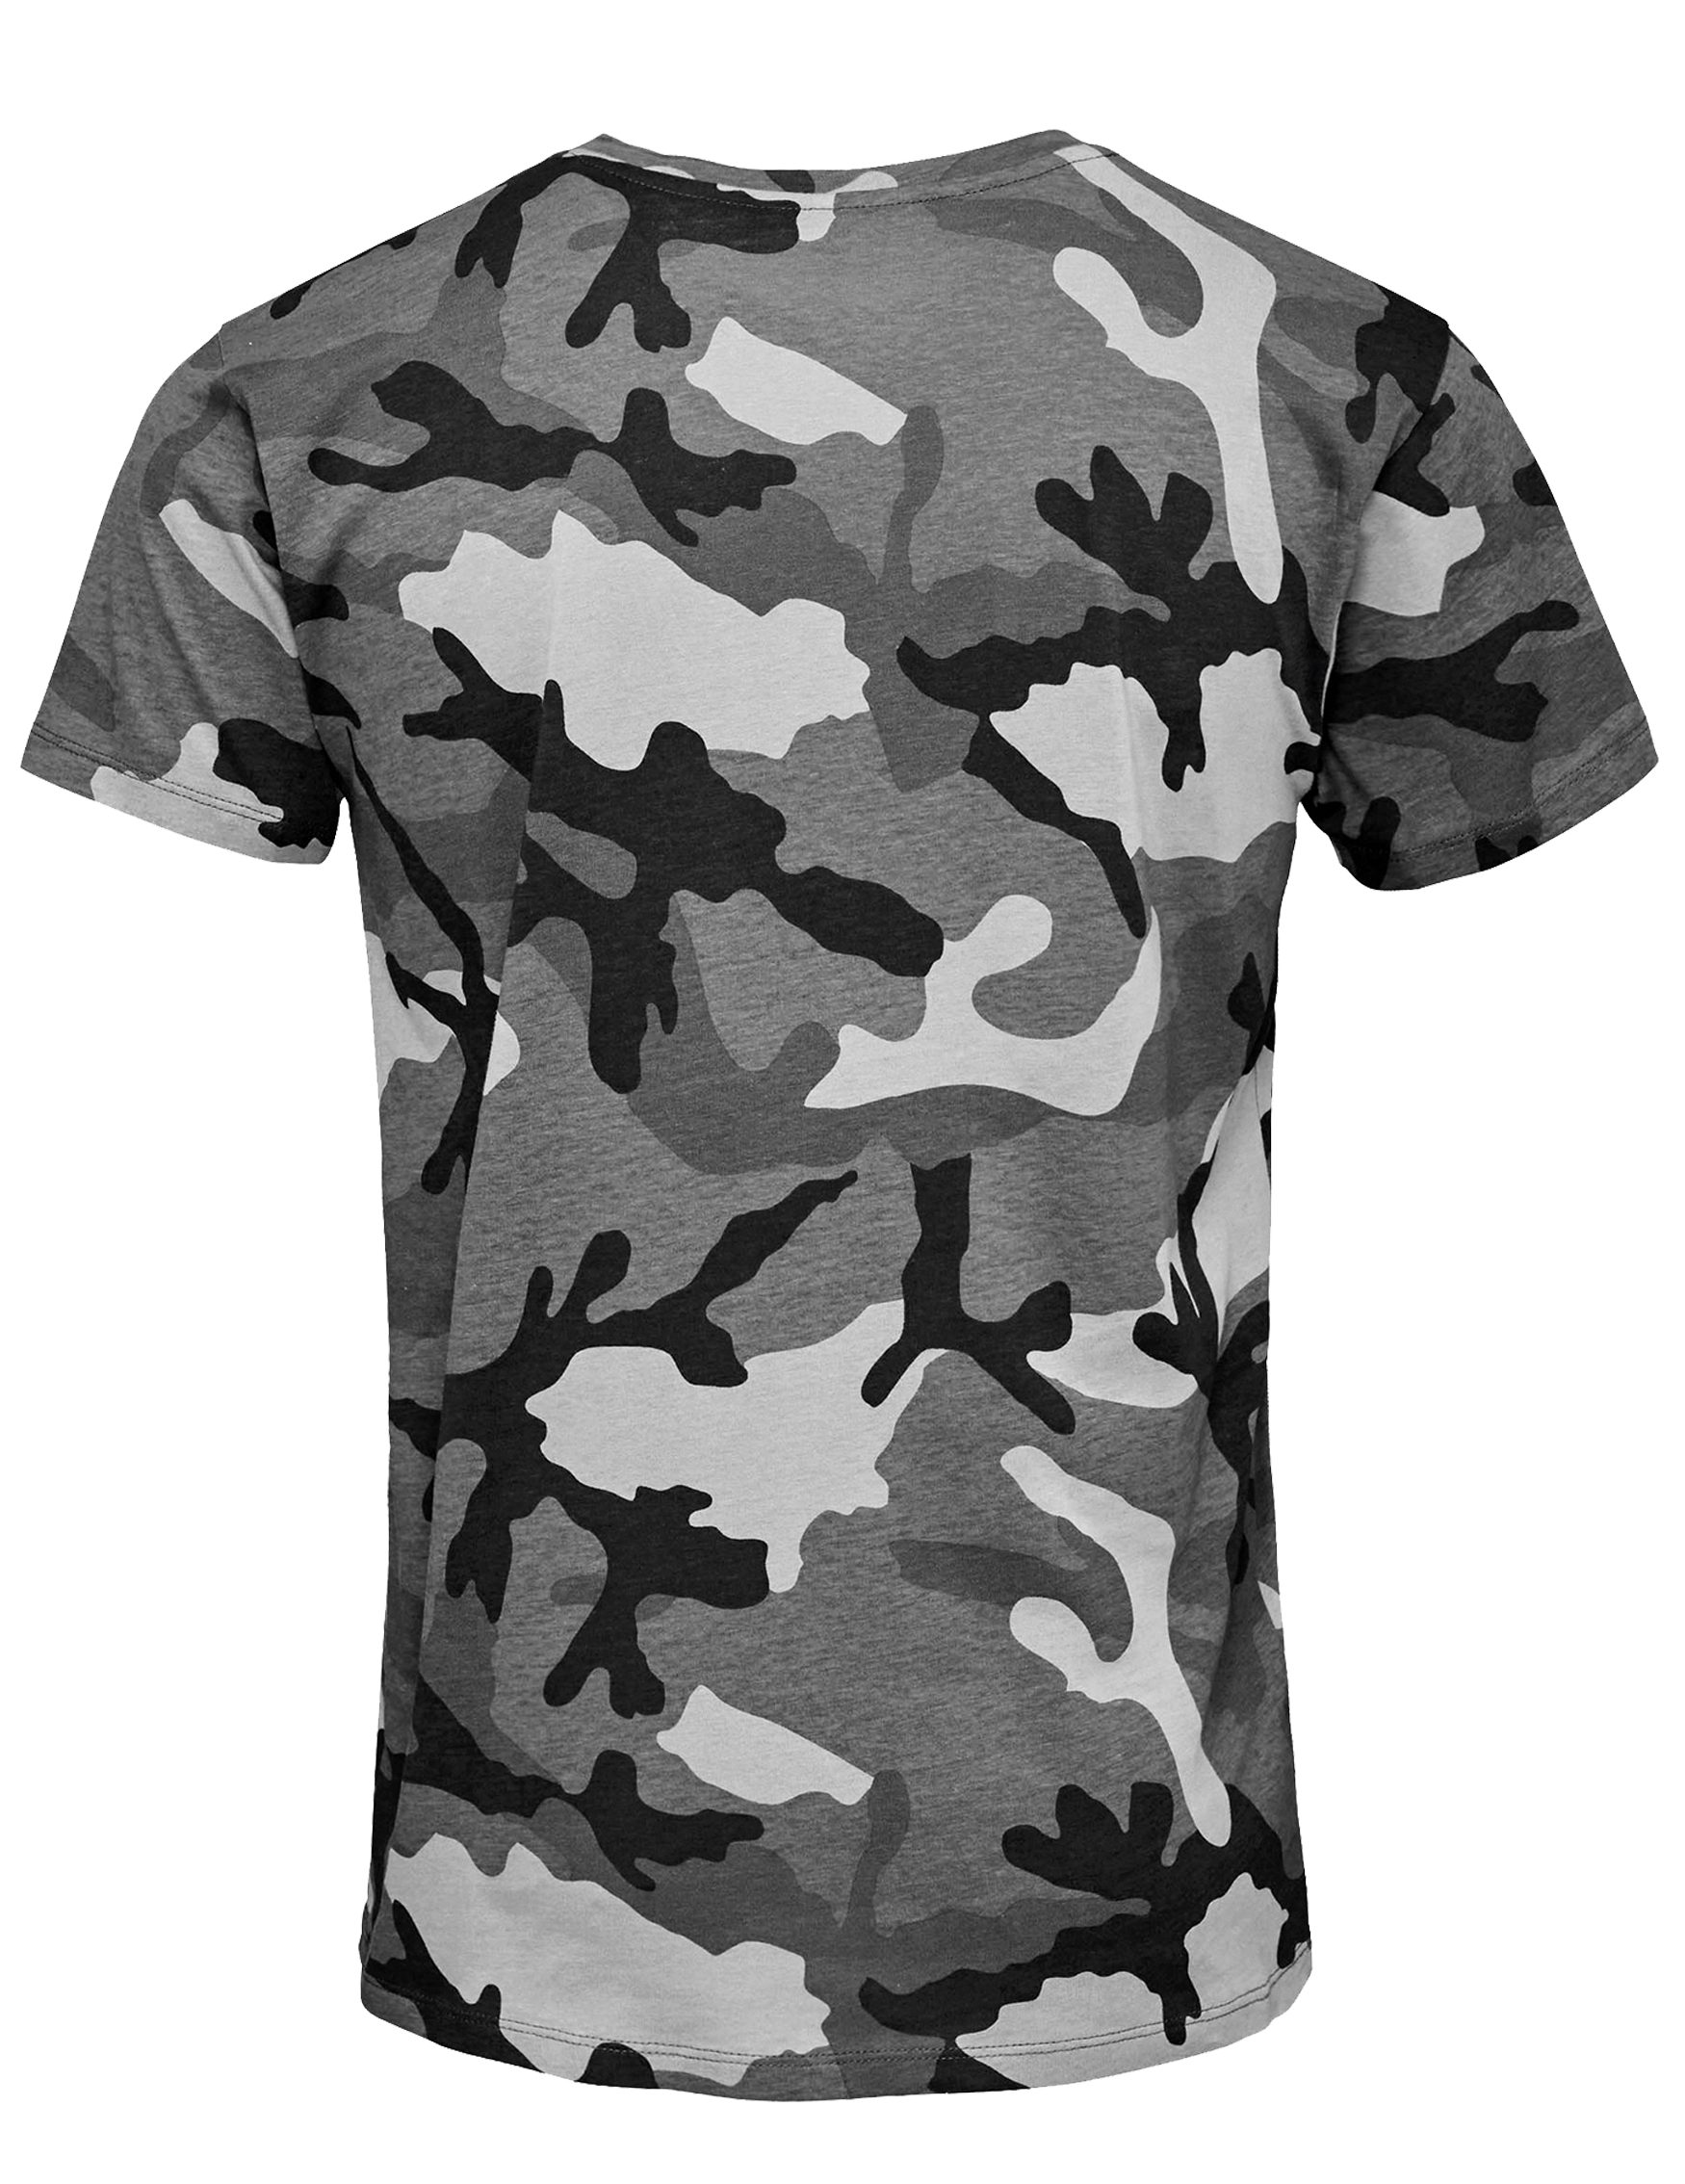 Blau Shirt Look Military, Farben Art & lieferbar, Grey Camouflage Camo Tarn T-Shirt und Army Grün Grau in Detail Camo